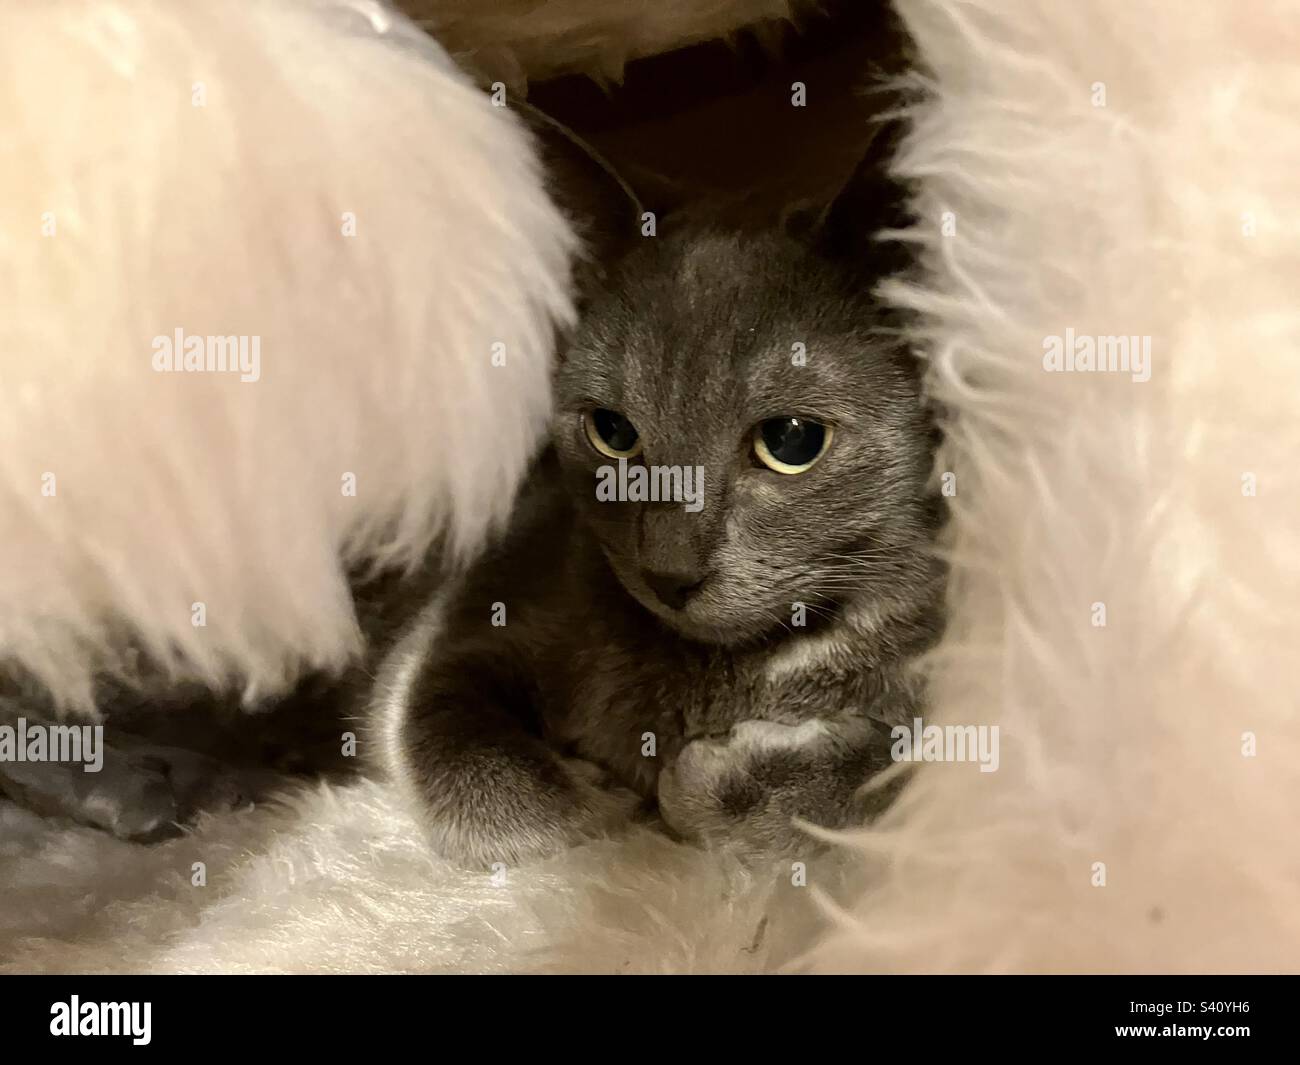 Kitten, young cat, baby cat, small cat, grey cat, sleeping cat Stock Photo